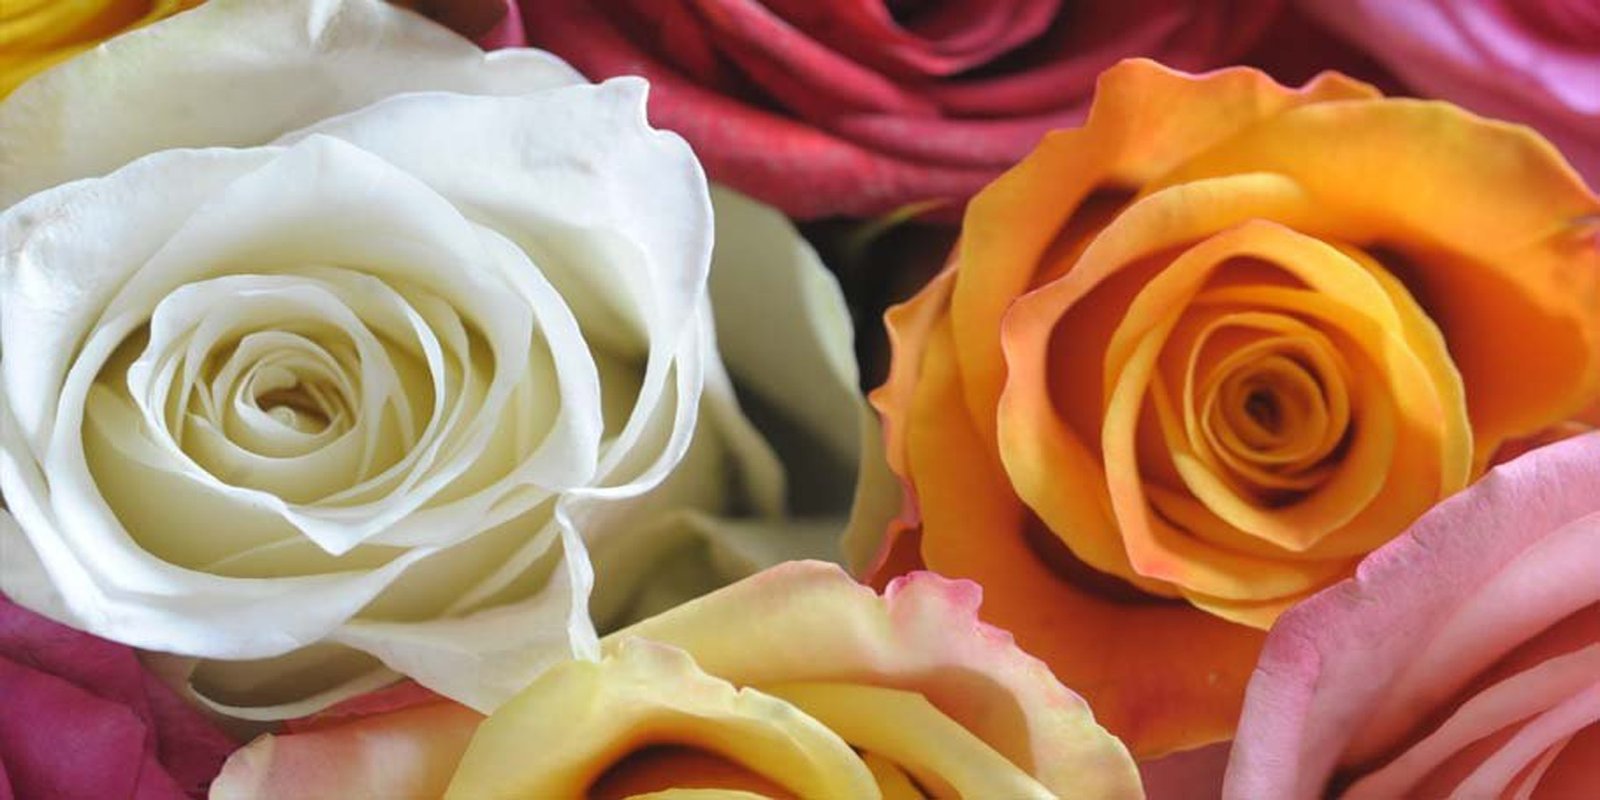 5 tips a florist should consider when Marketing during Ramadan